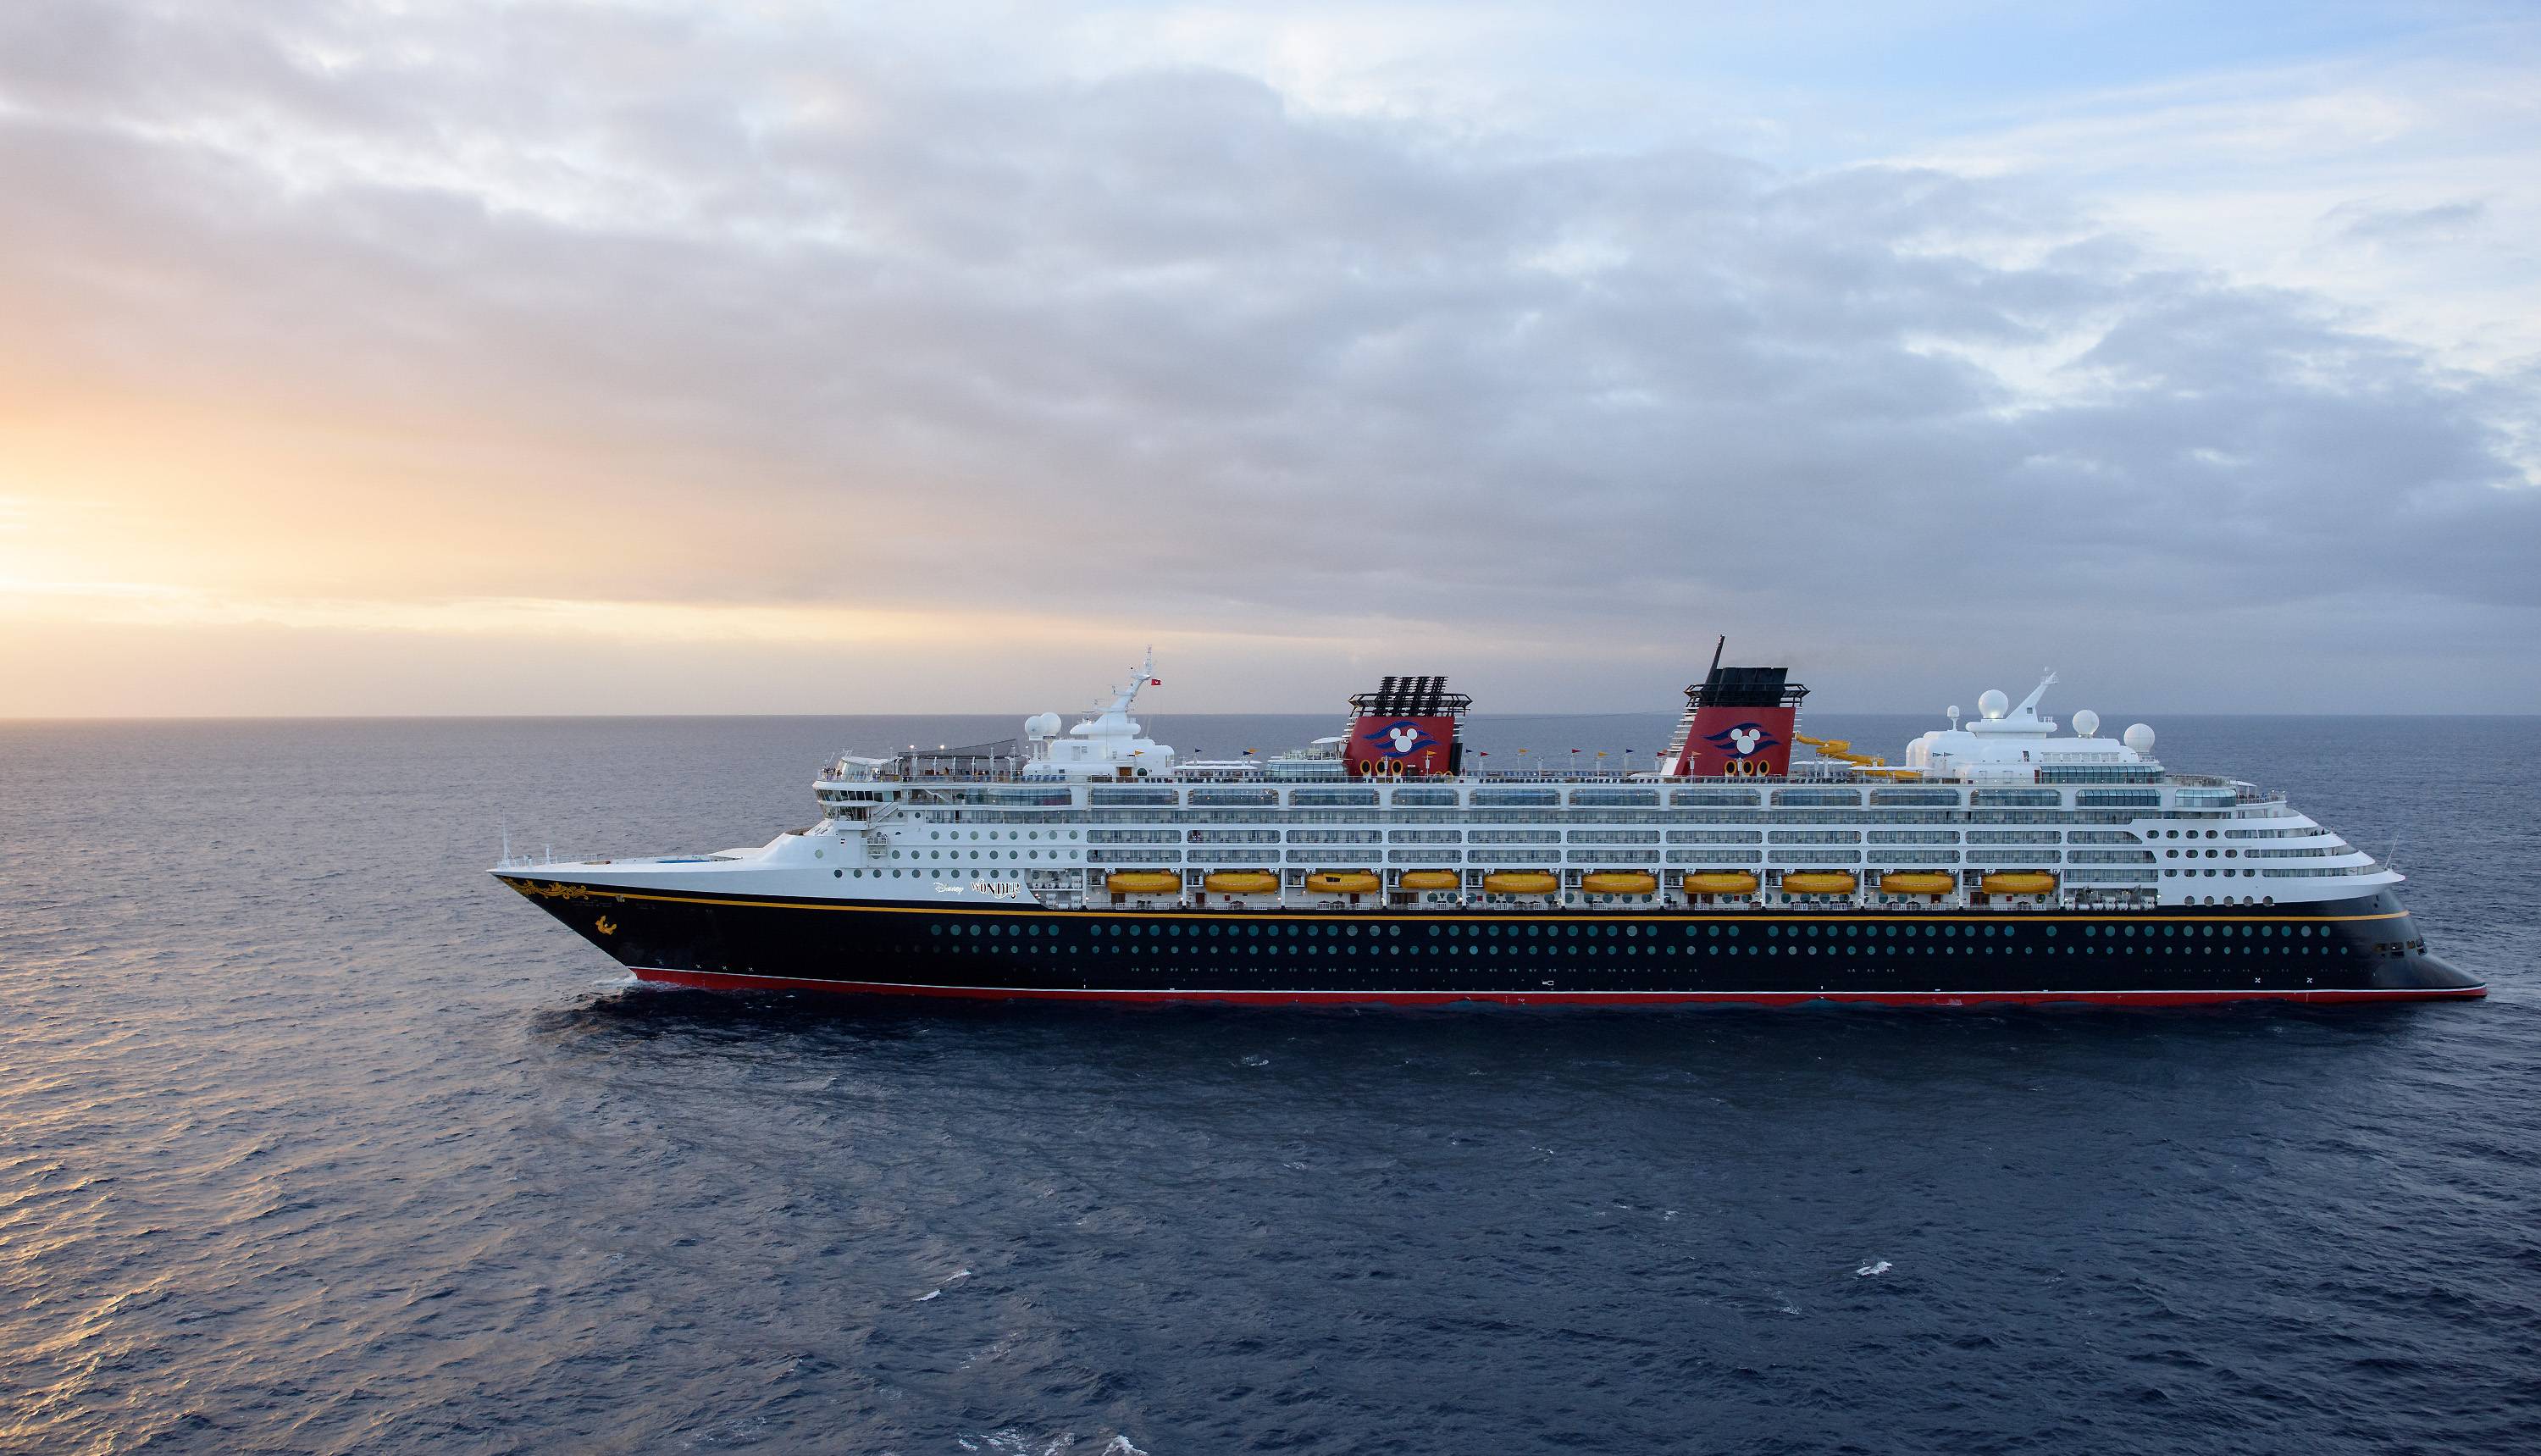 Disney Cruise Line US departures through June 2021 are suspended